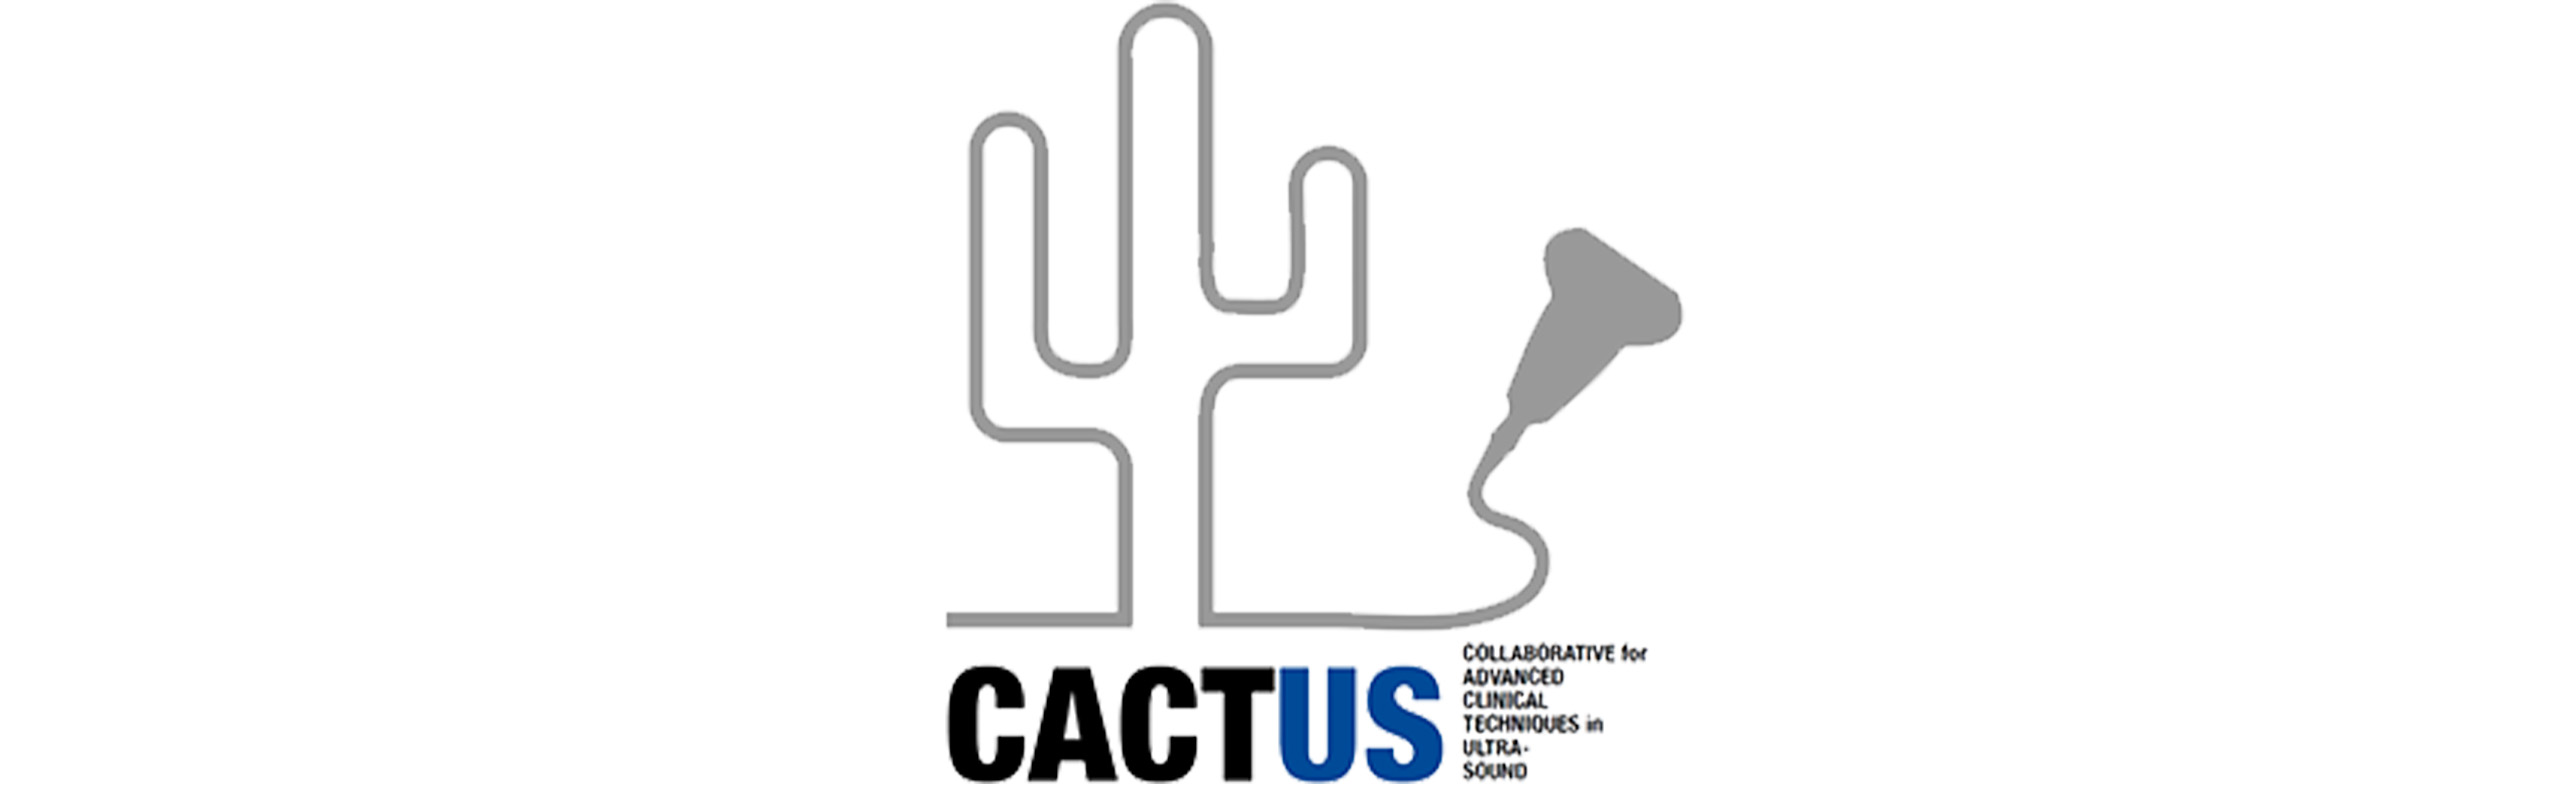 cactus-desktop-banner.jpg